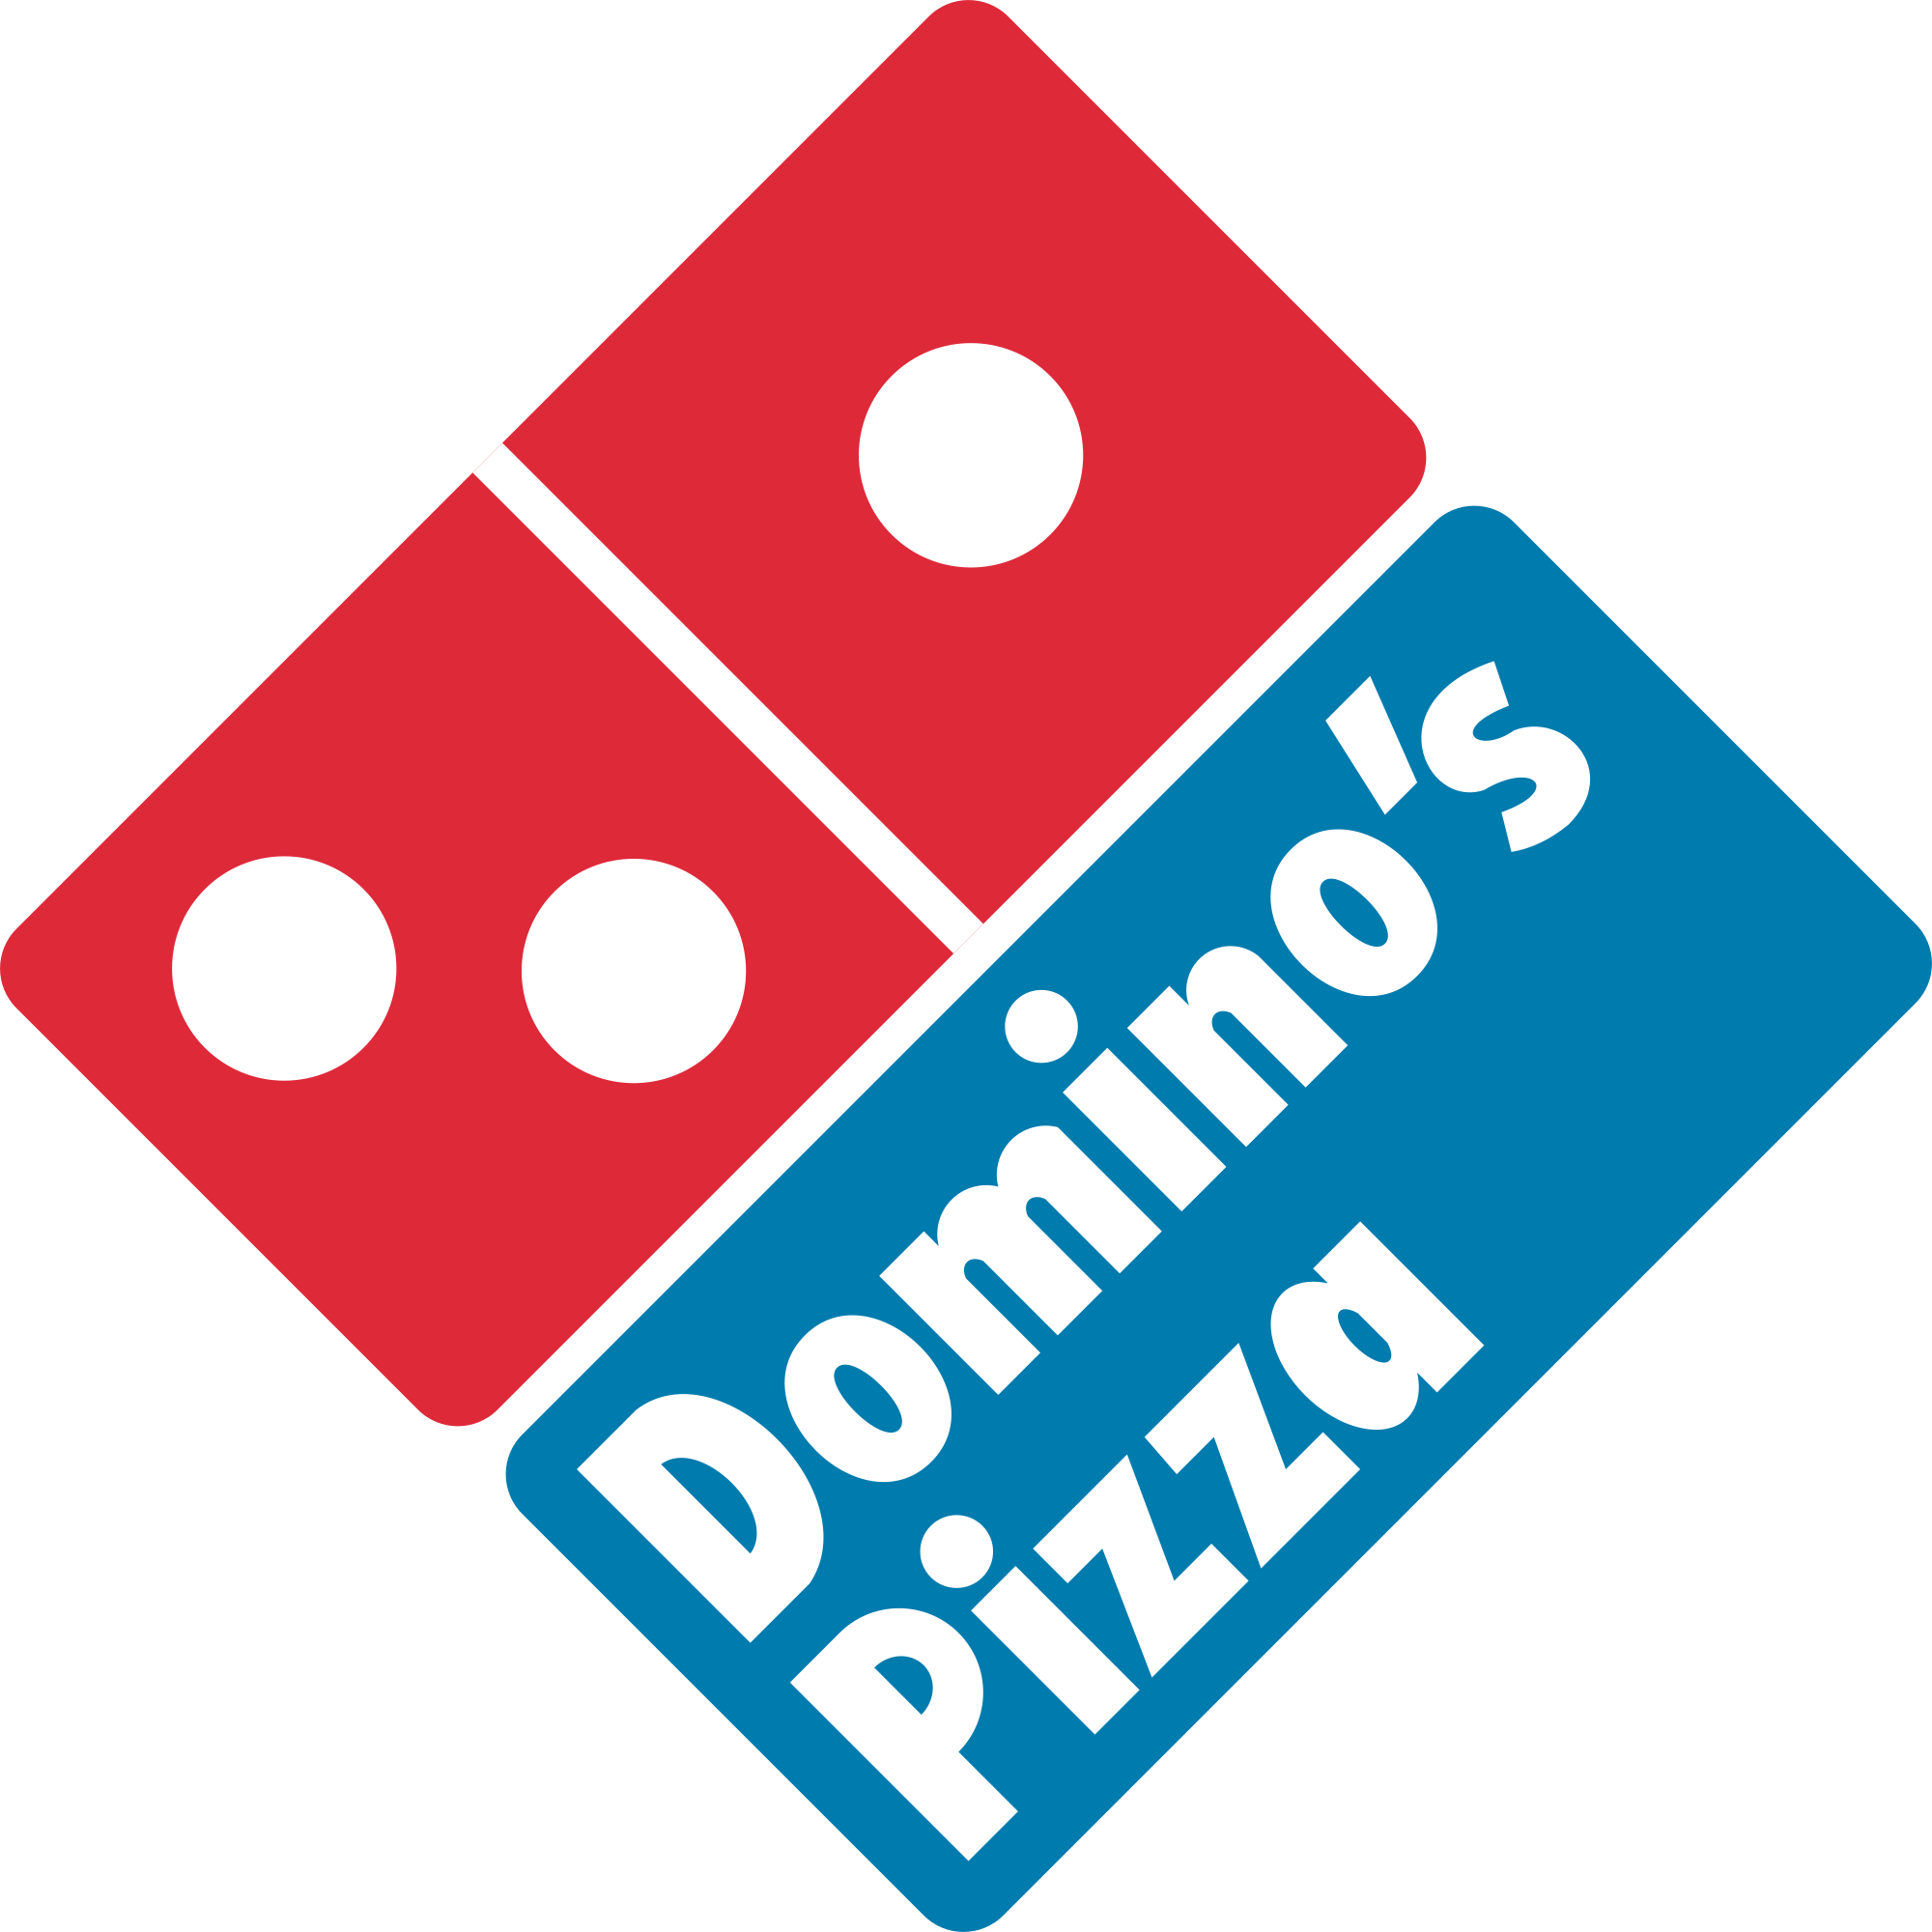 Dominos Pizza logo PNG HD Качество